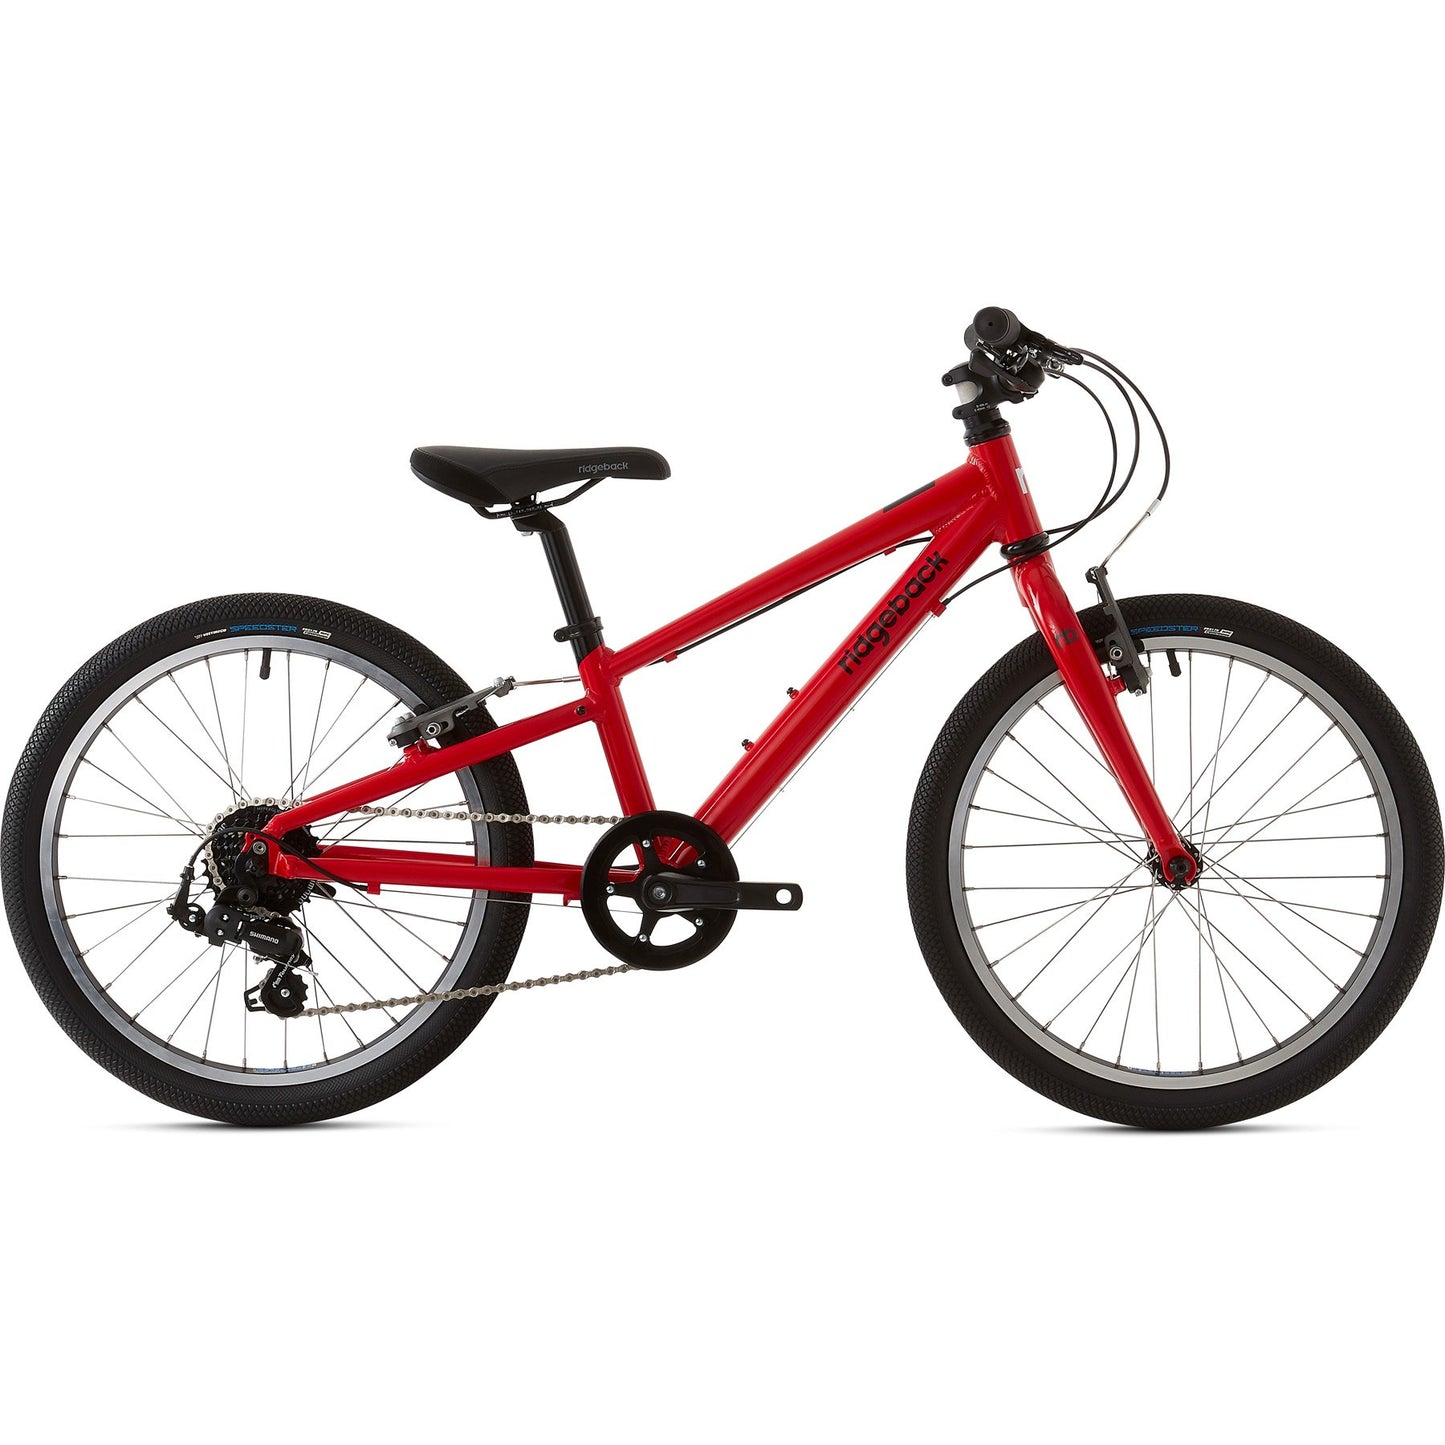 Ridgeback Dimension 20 2020 Kid's Bike - Red